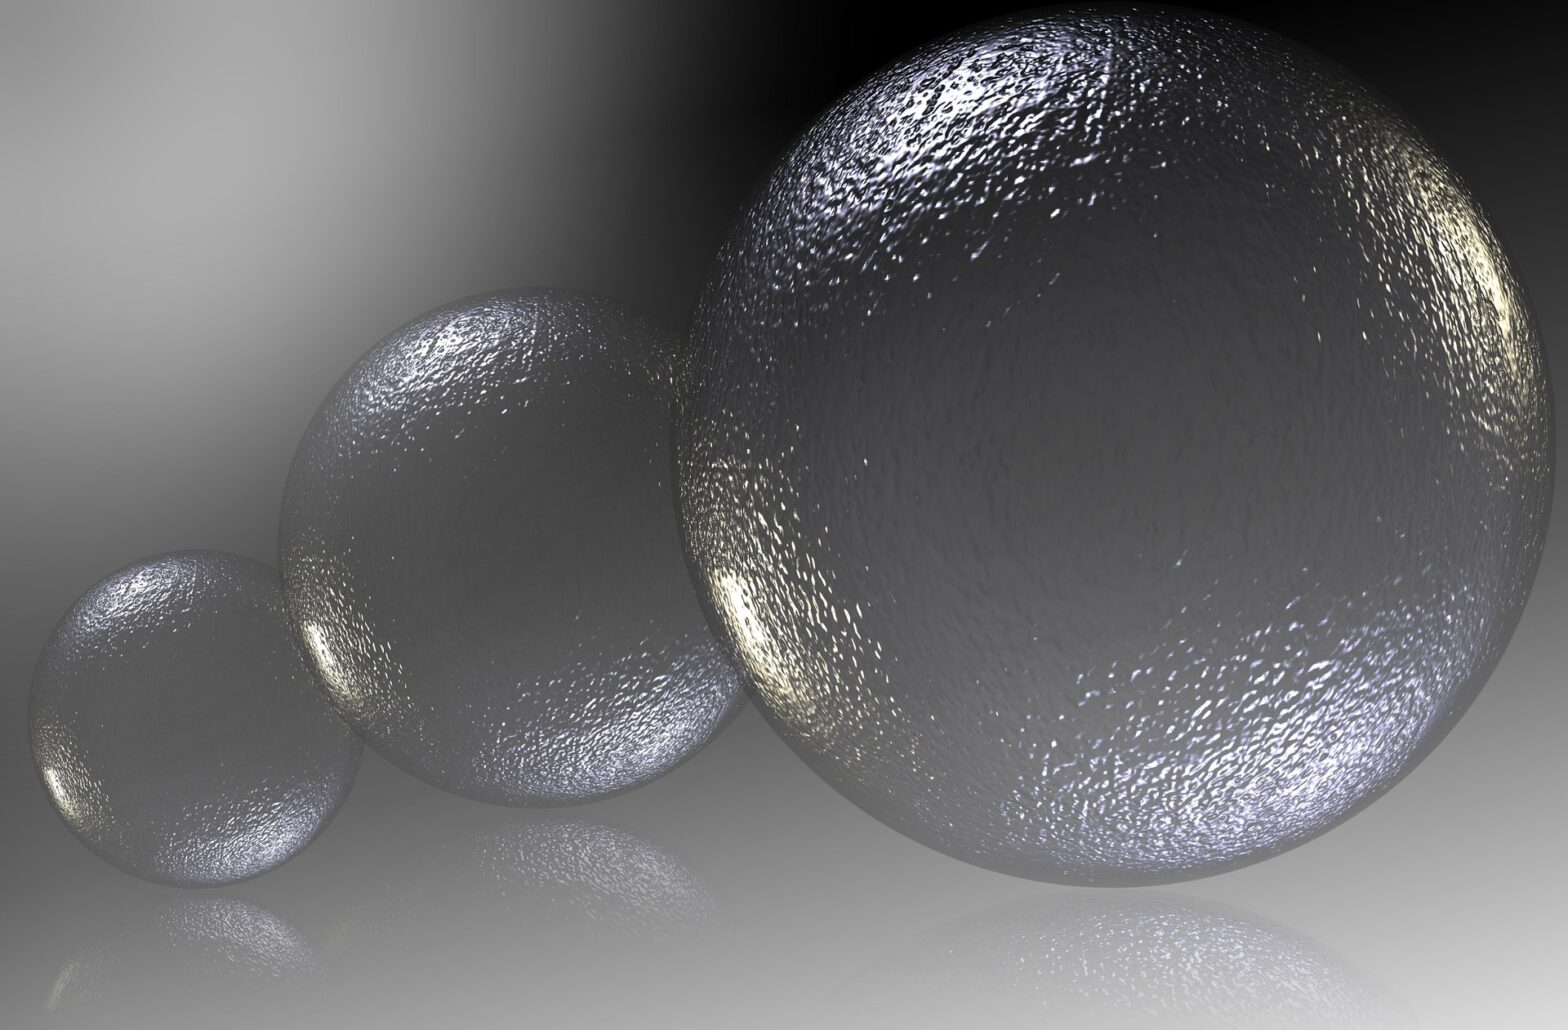 Transparent spheres